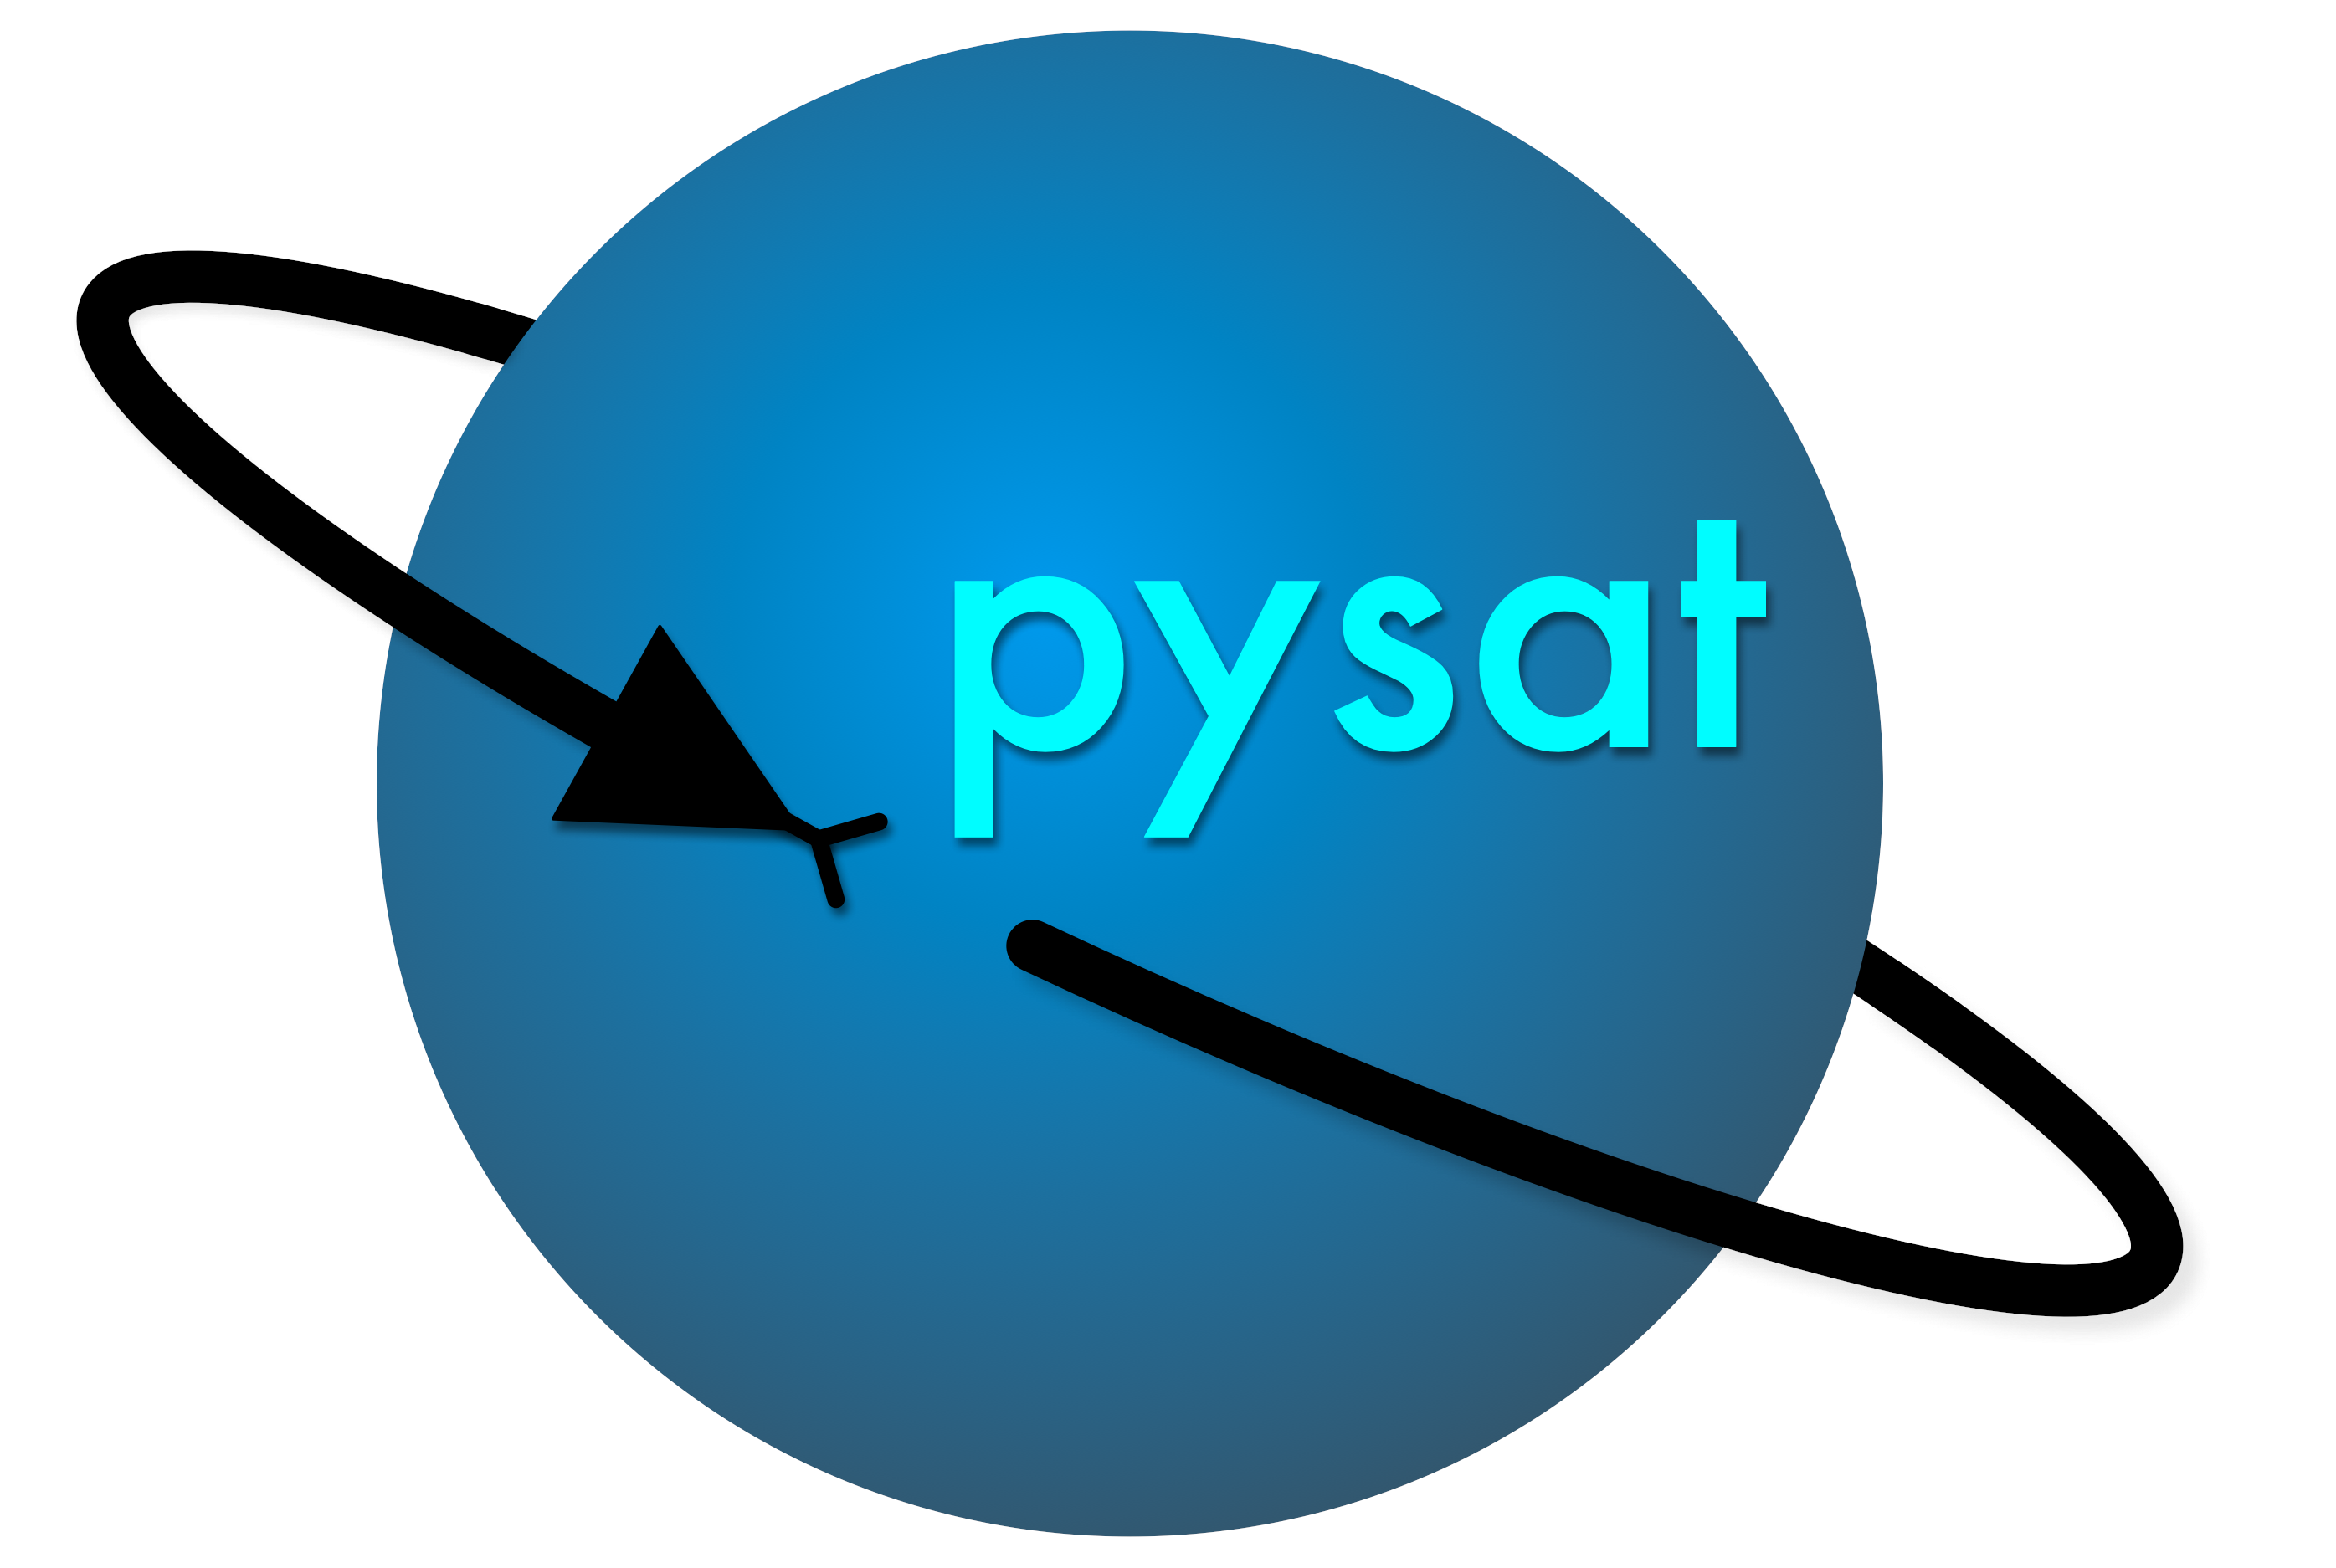 The pysat logo: A snake orbiting a blue sphere